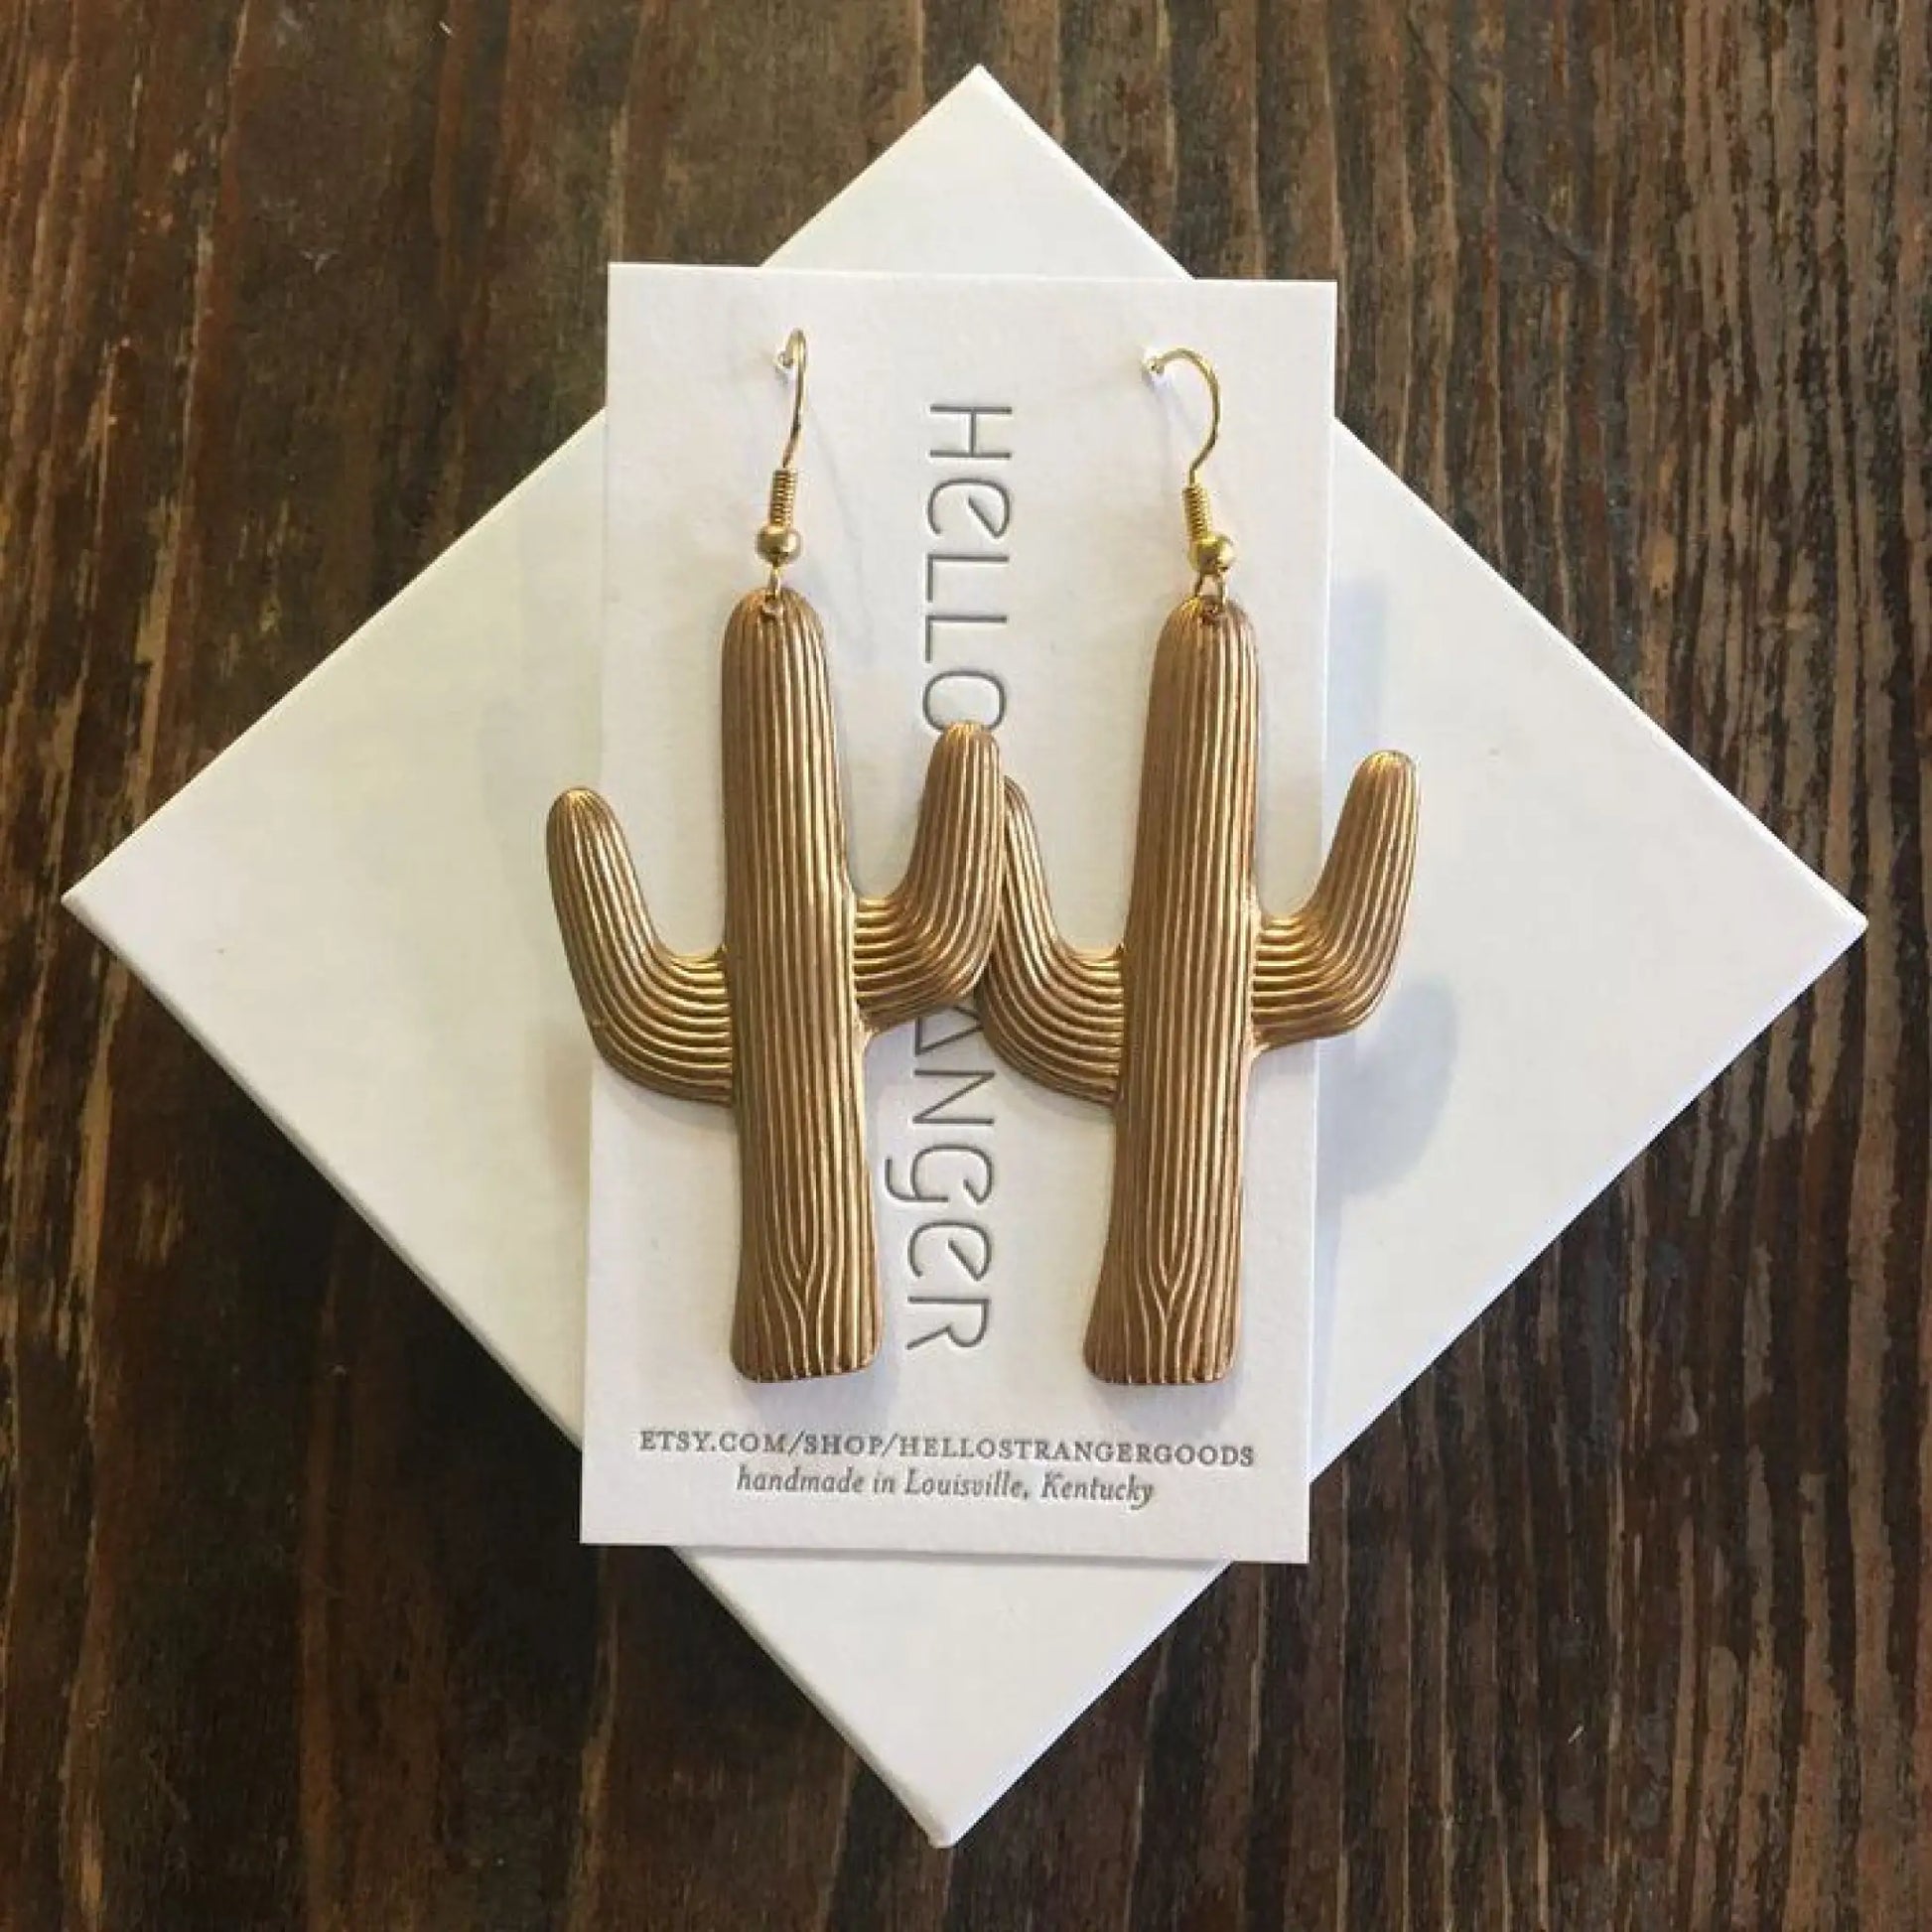 Giant Brass Cactus Earrings - Jewelry